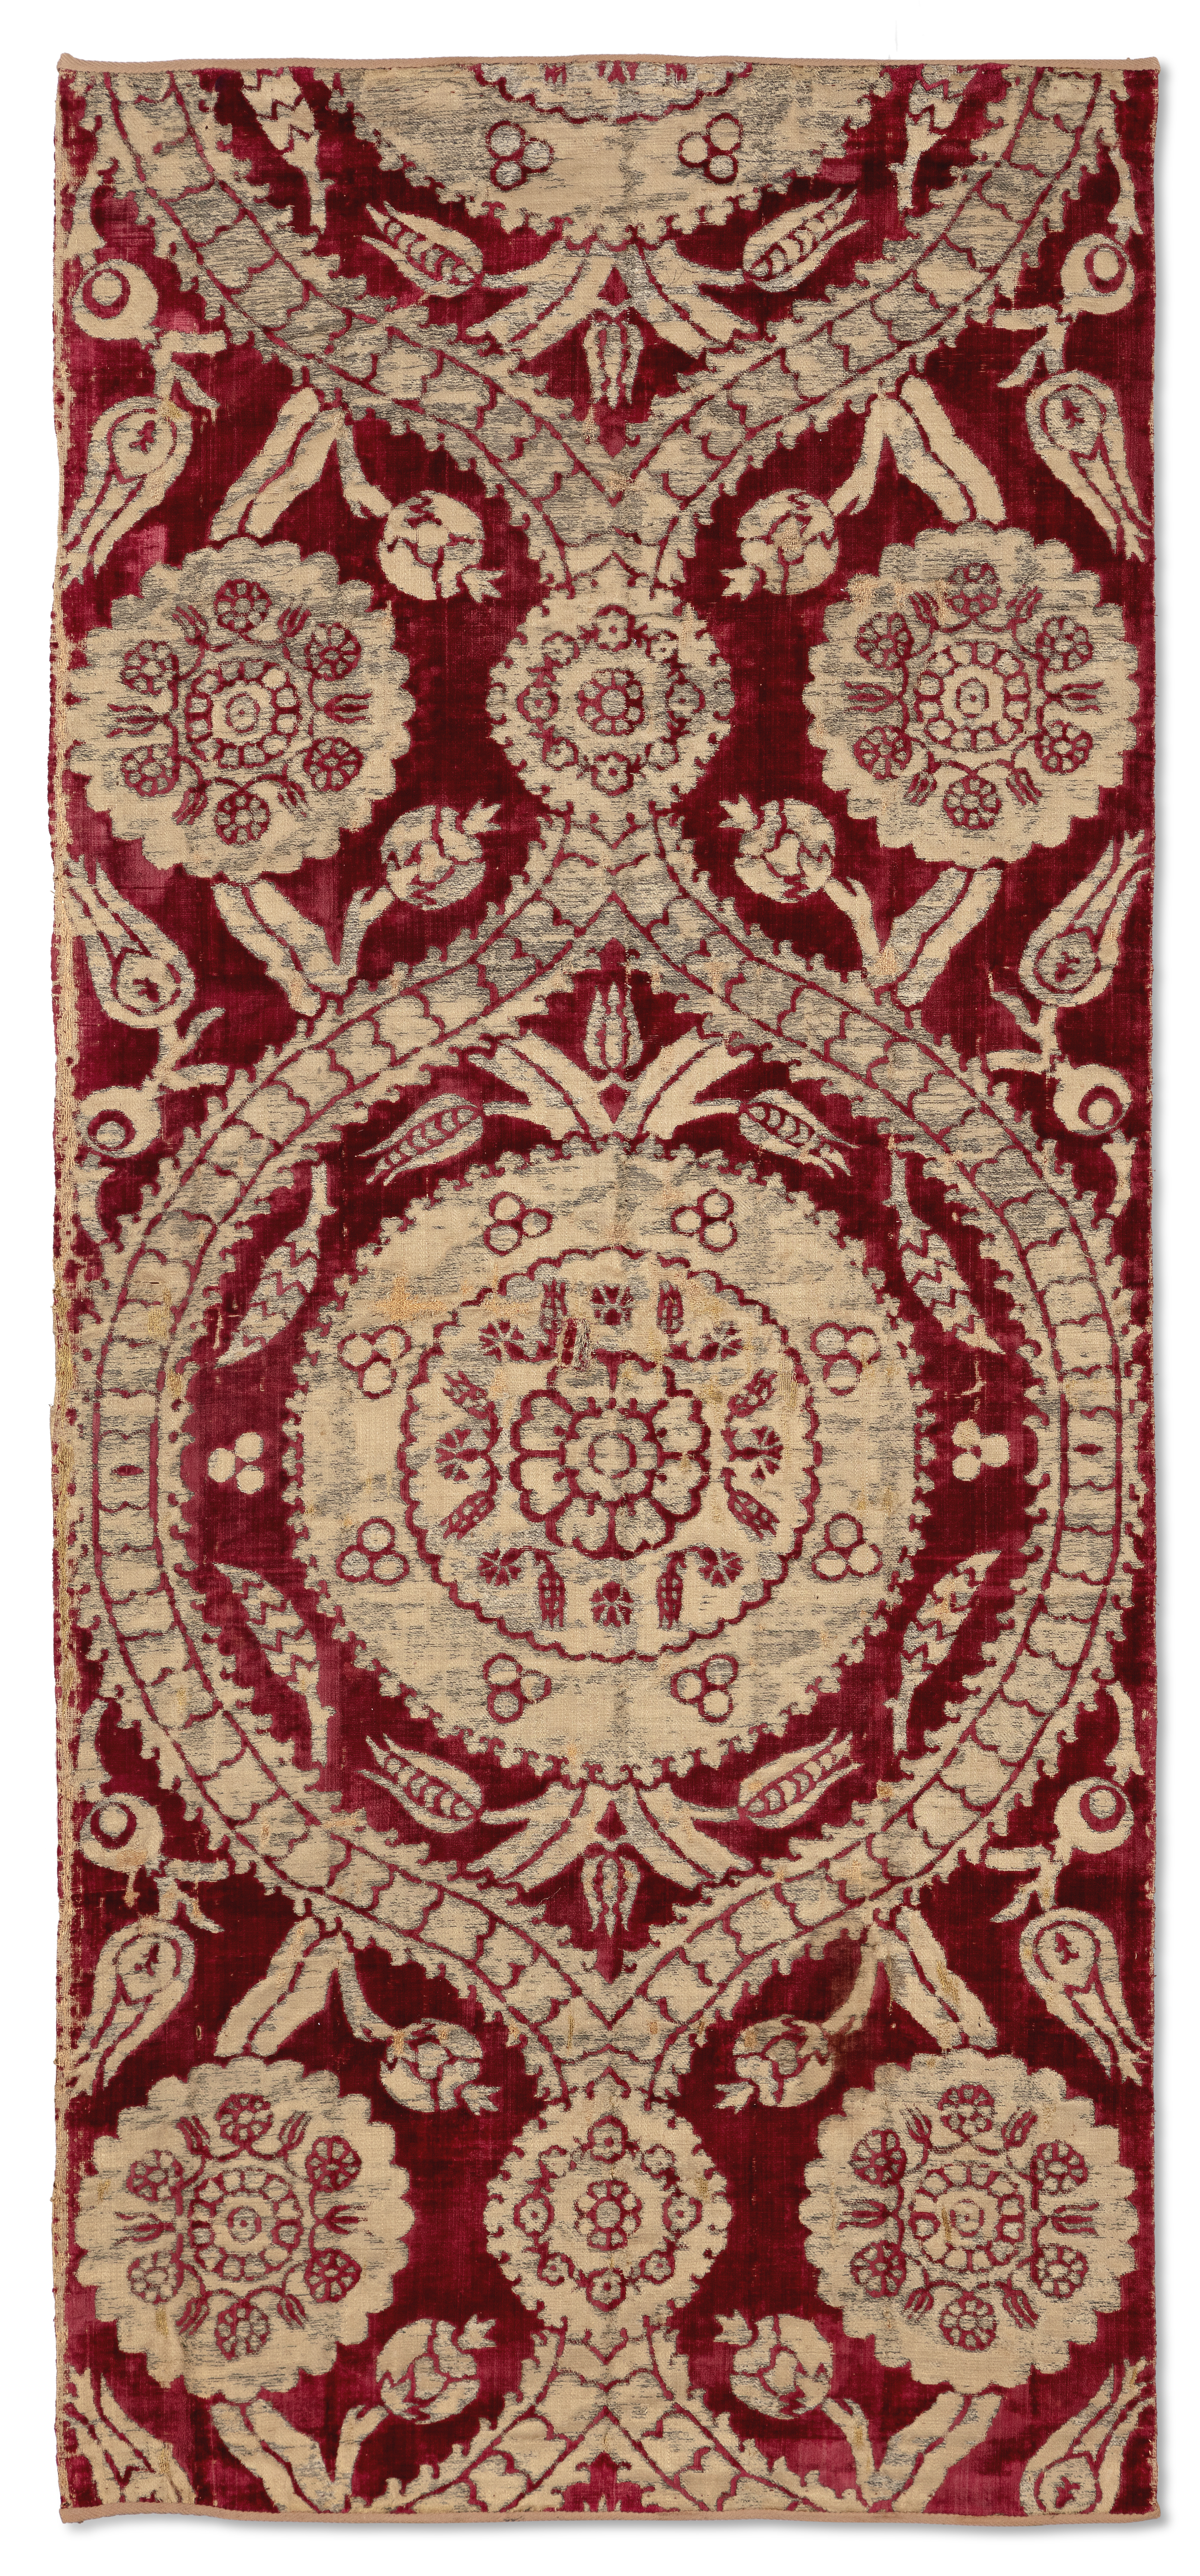 Two voided crimson velvet and silk çatma panels, Ottoman Bursa or Istanbul, 17th century, Each wo...